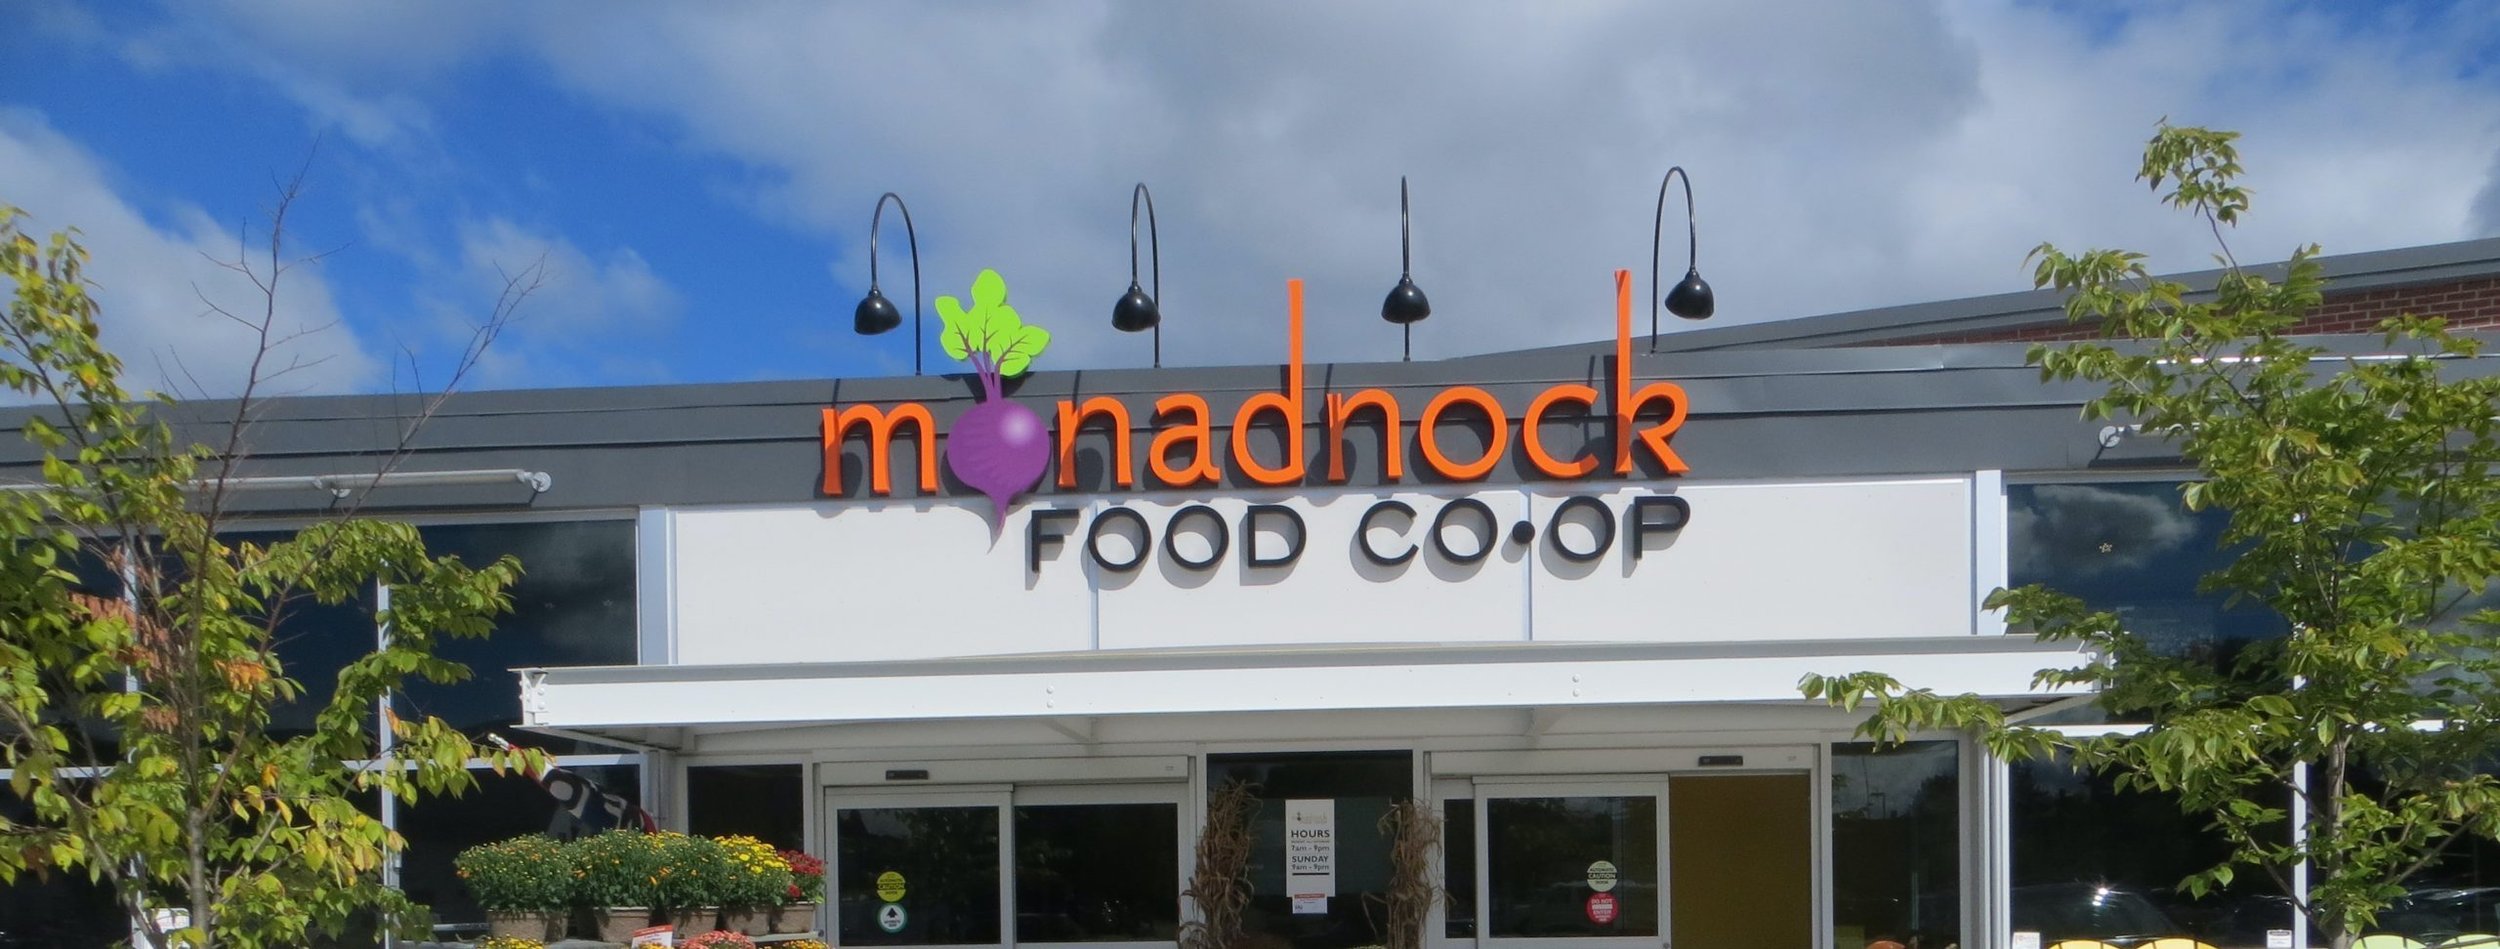 Monadnock Food Coop